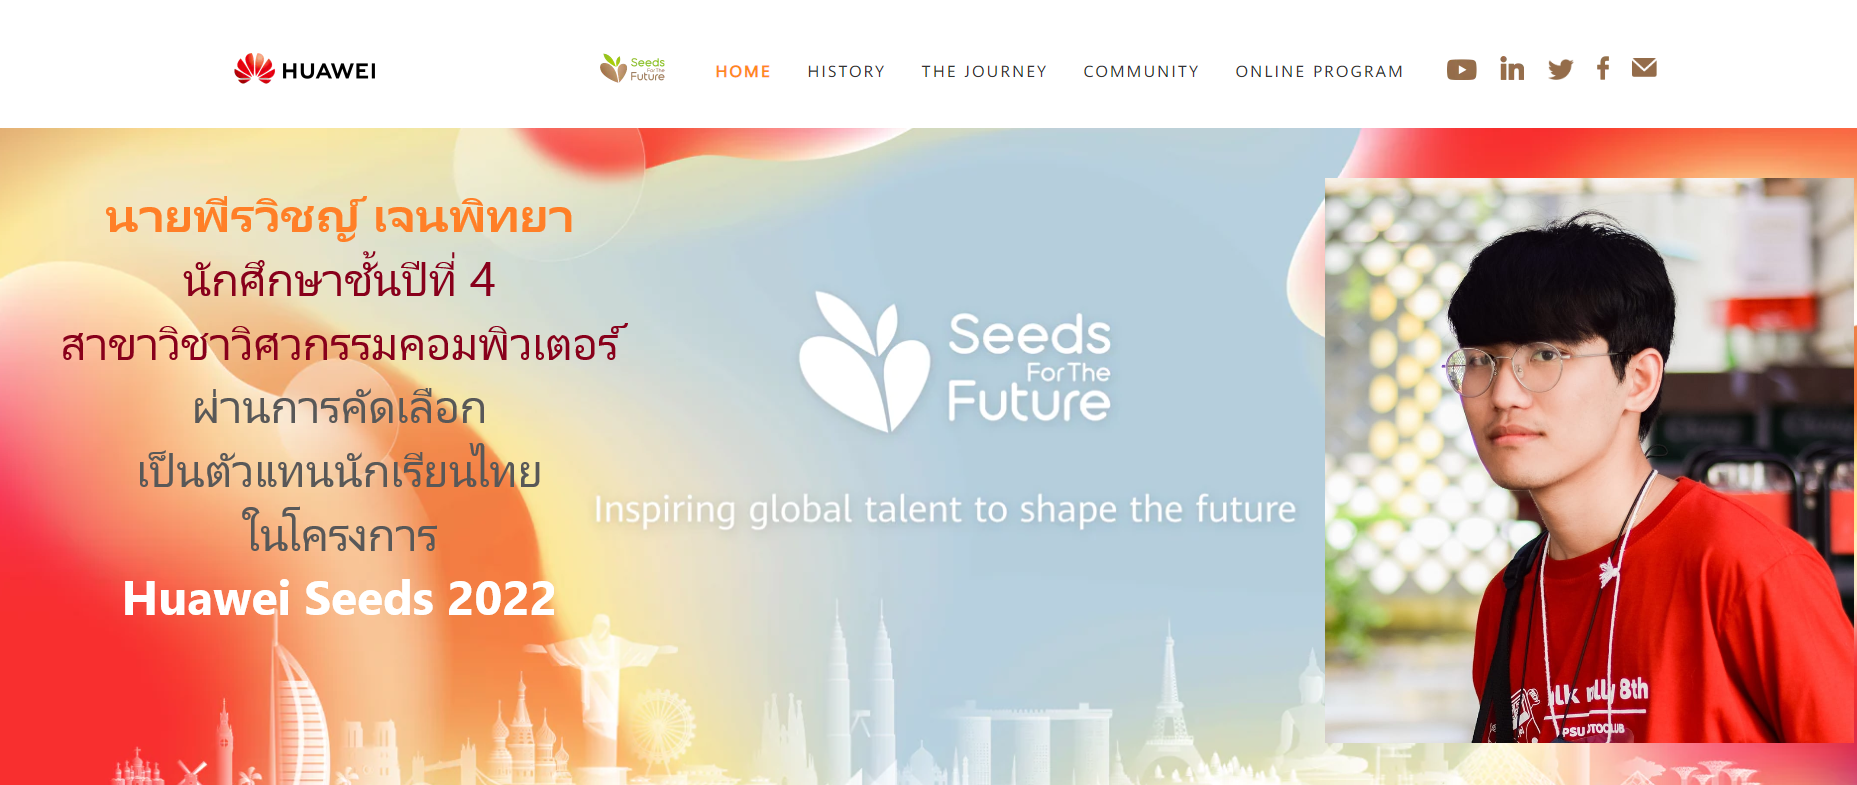 Huawei Seeds 2022